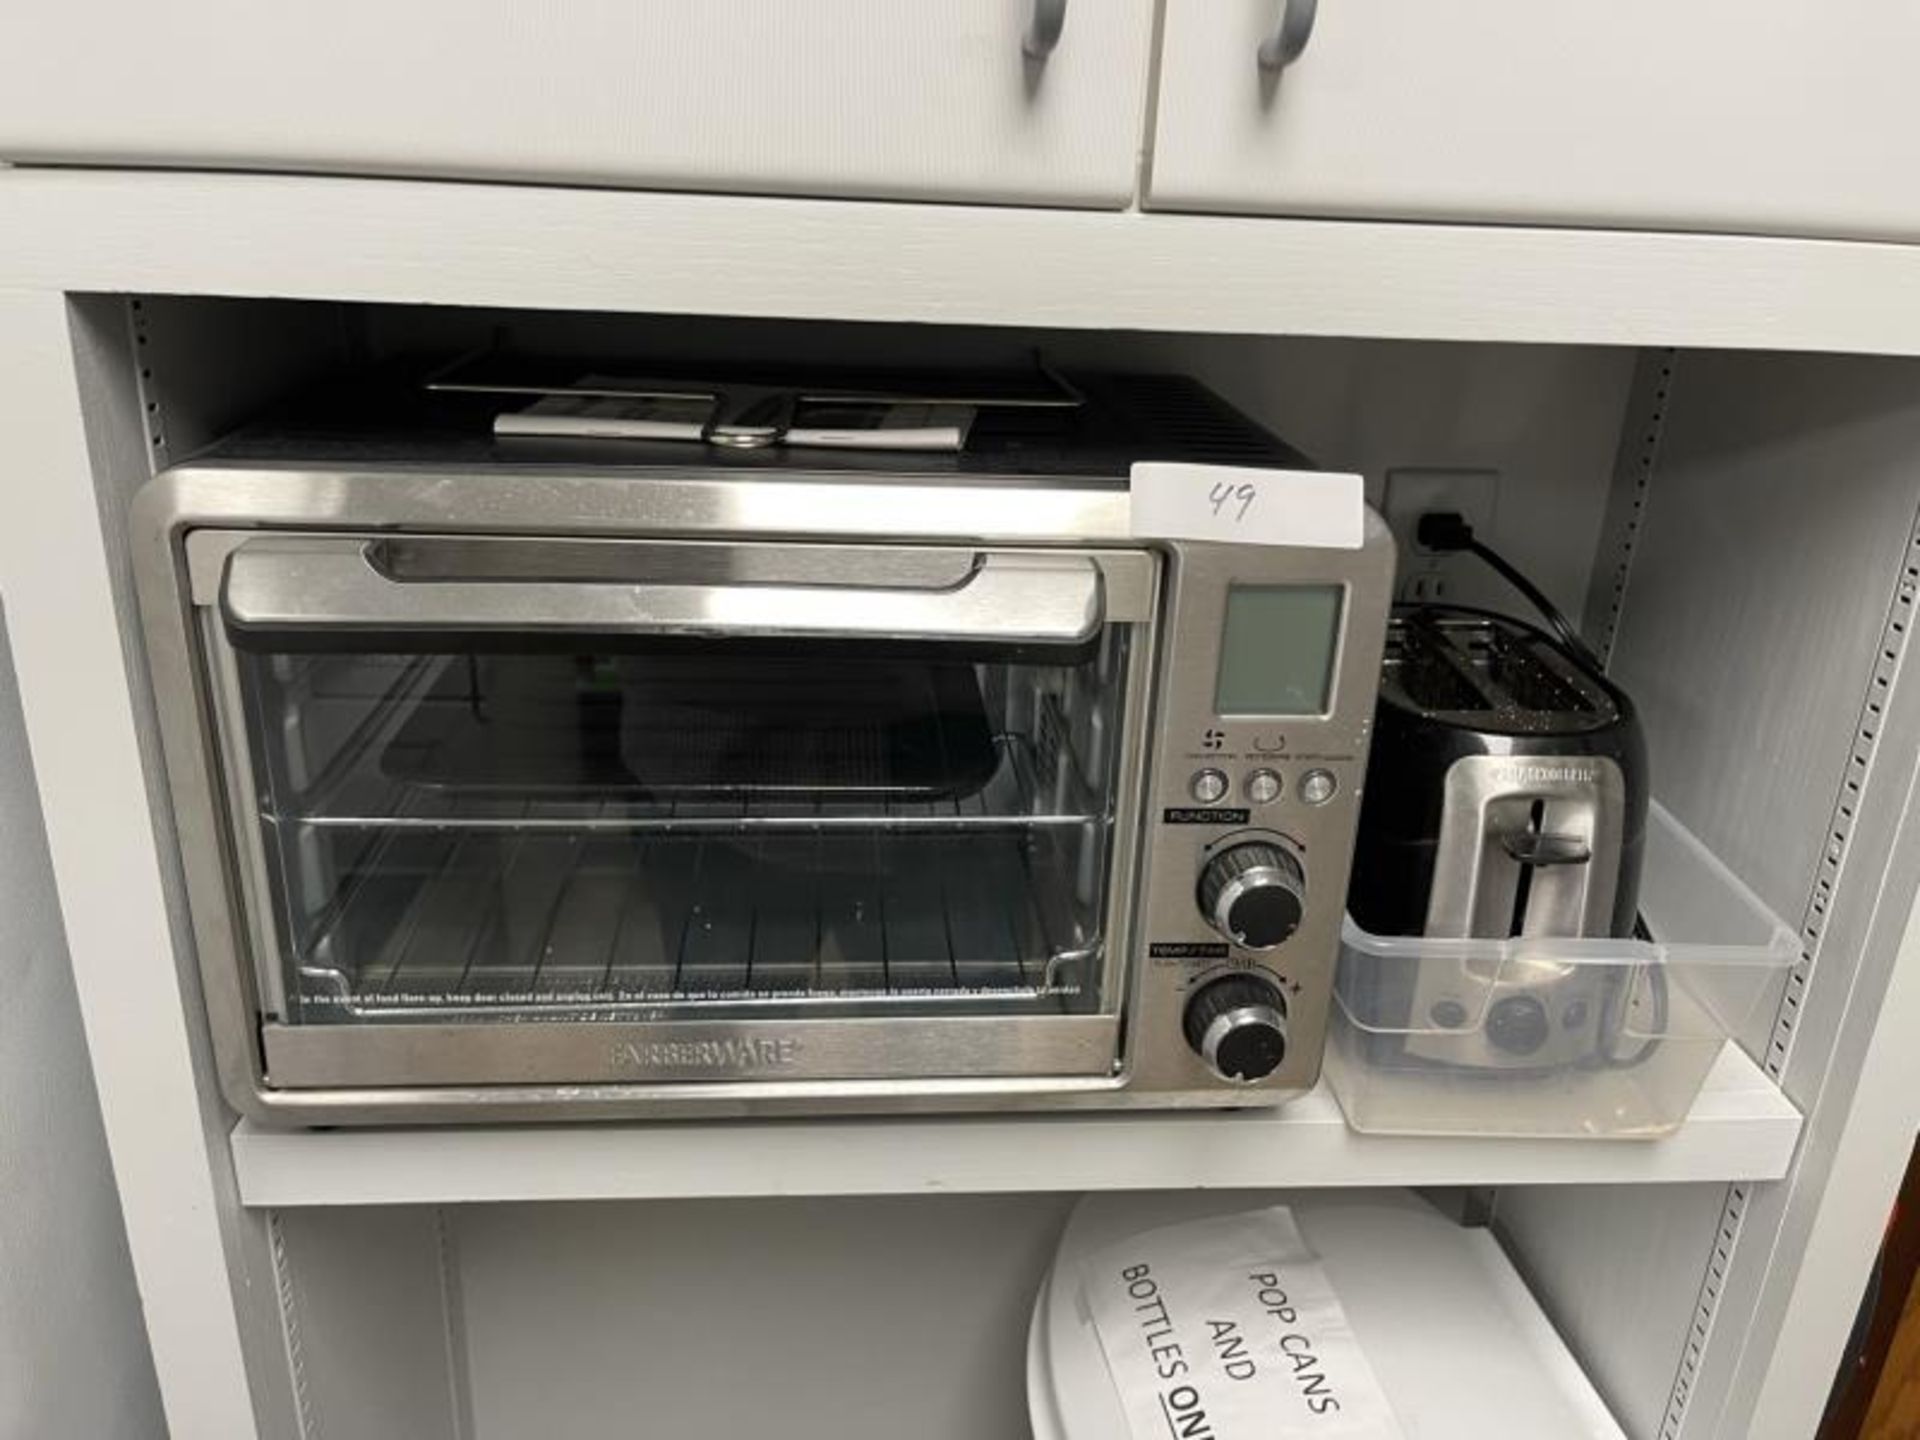 Farber Convection Toaster Oven, Black & Decker Toaster, Bunn Coffee Maker, Toshiba Microwave & Ninja